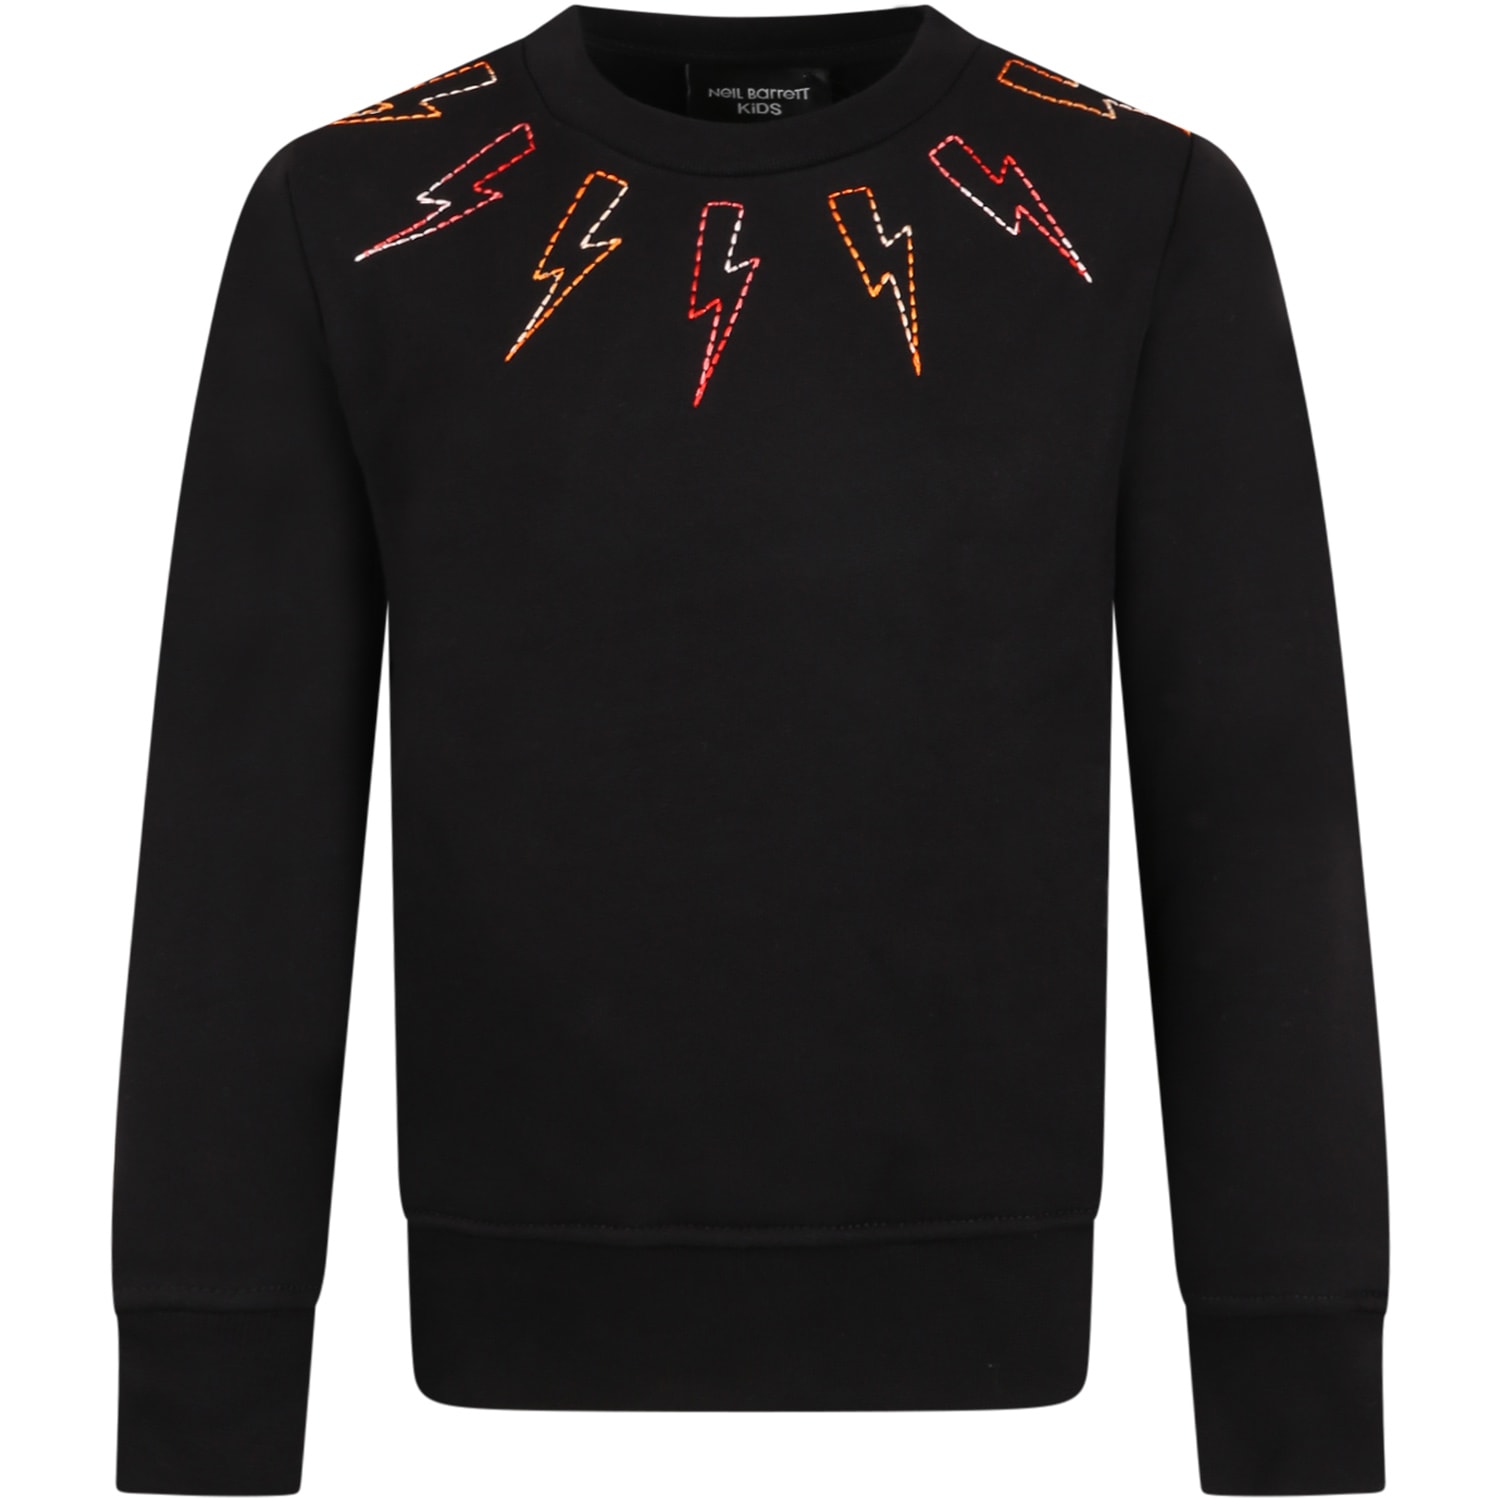 Neil Barrett Black Sweatshirt For Boy With White Lightning Bolts